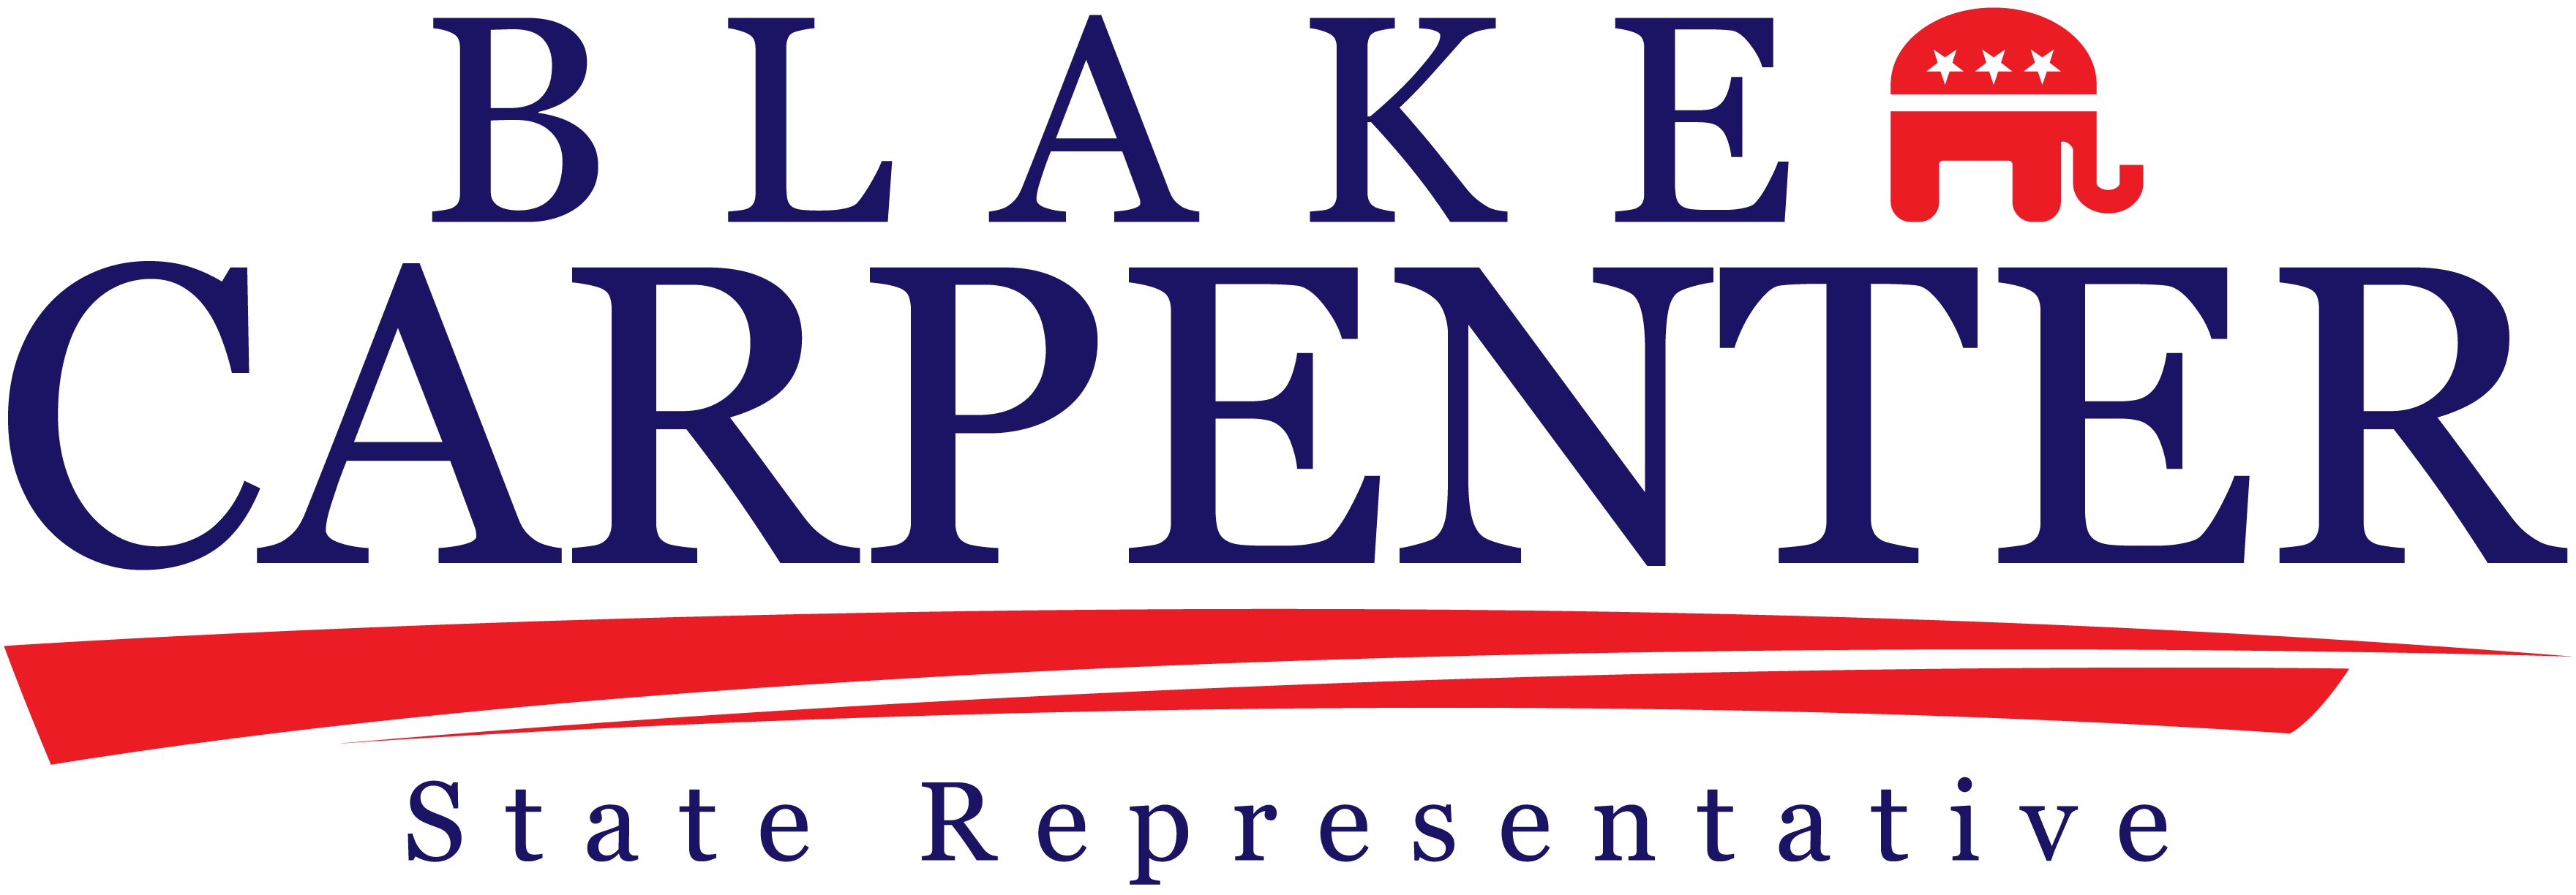 Blake Carpenter | State Representative